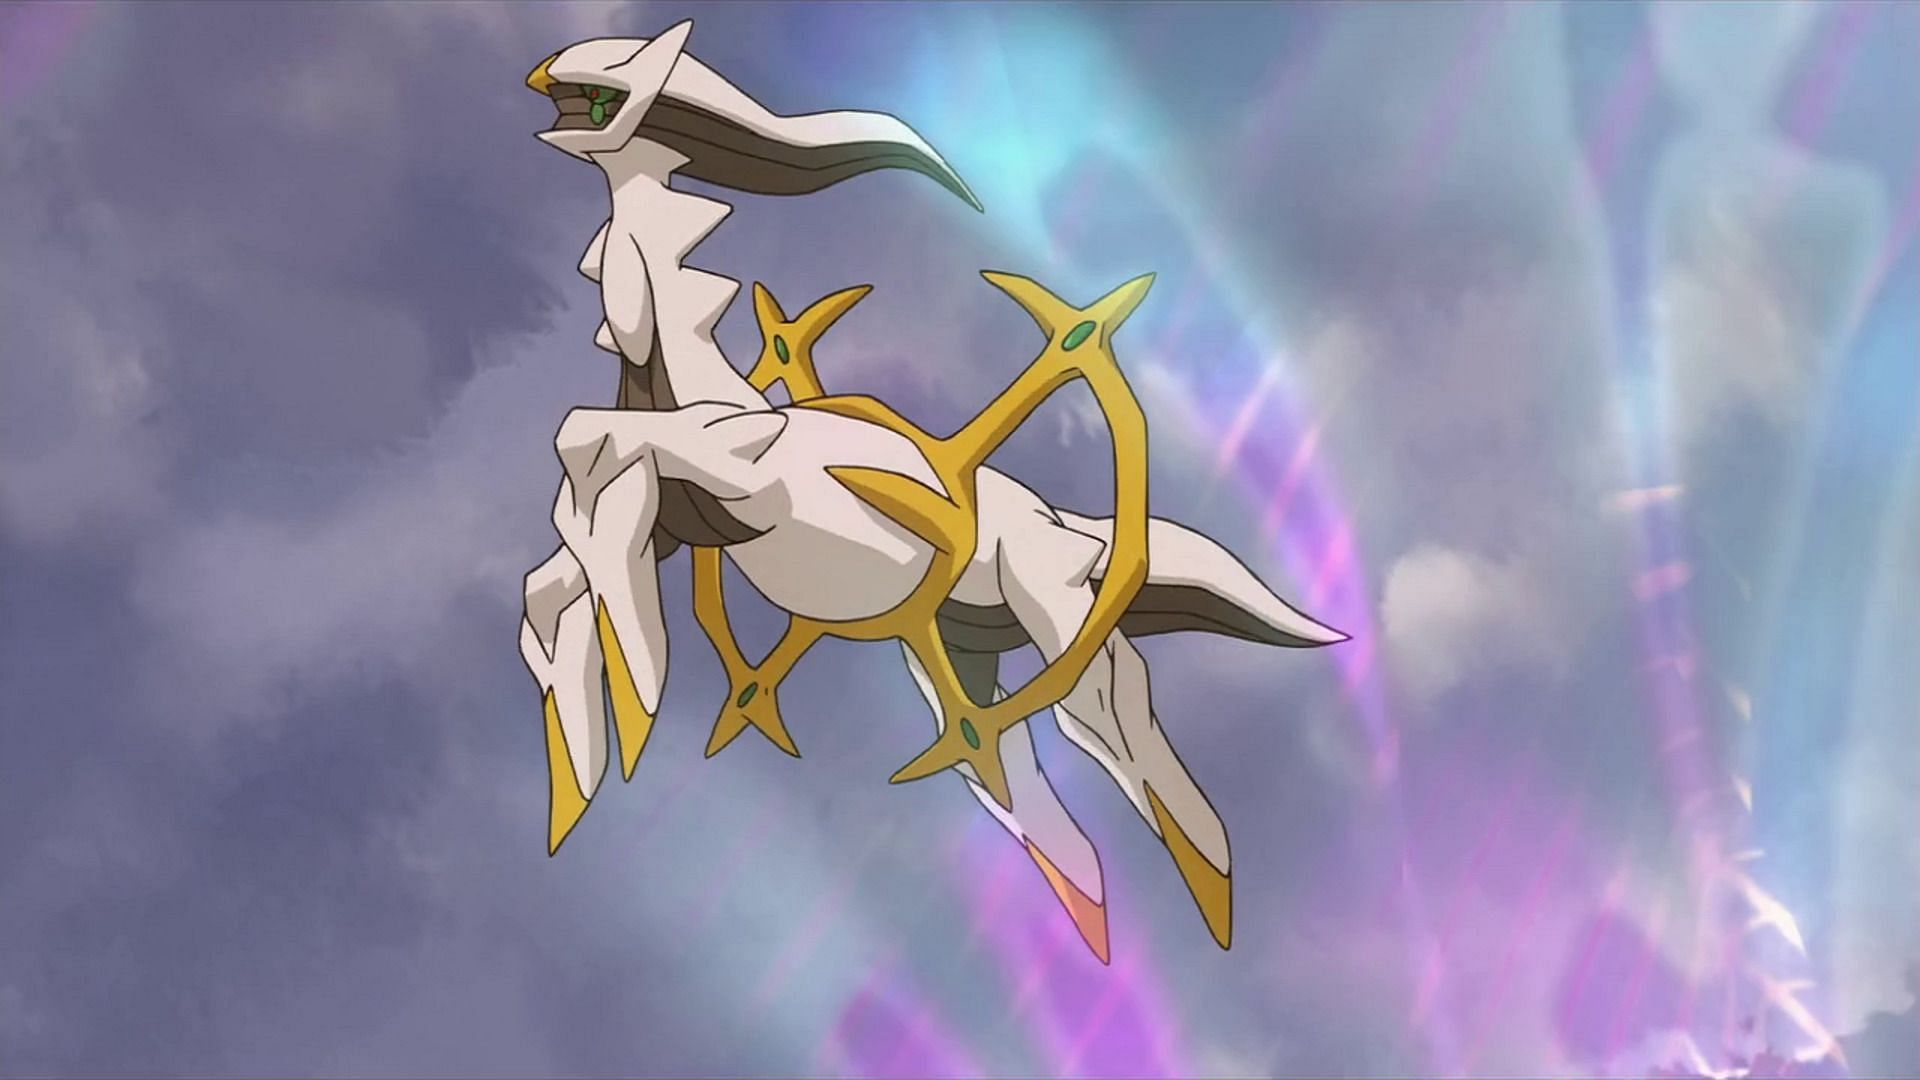 Arceus as seen in the anime (Image via The Pokemon Company)